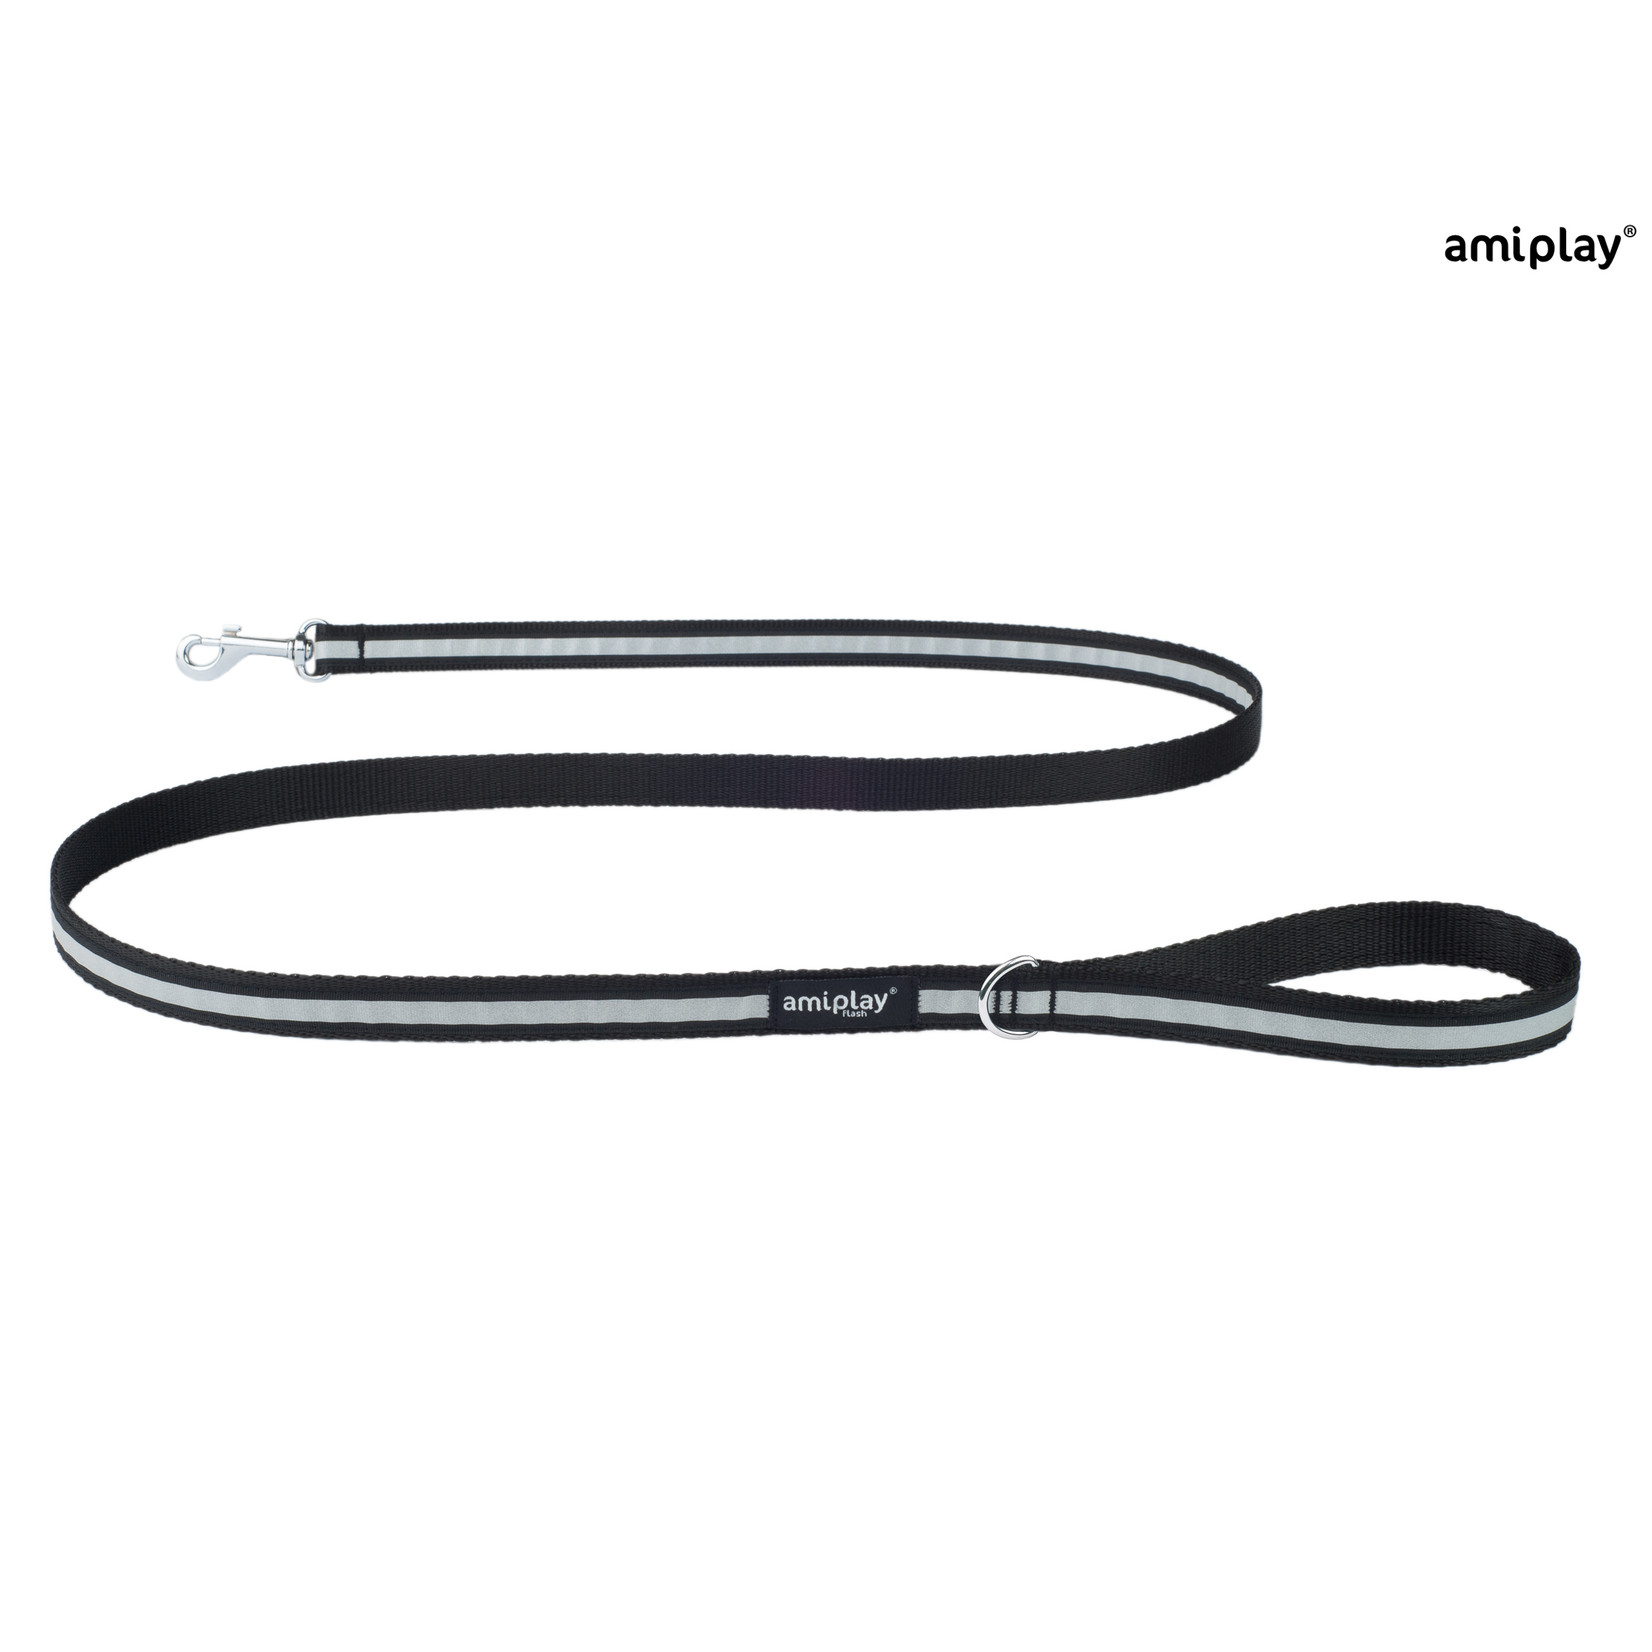 Amiplay Leiband Shine zwart maat-XL / 150x2,5cm